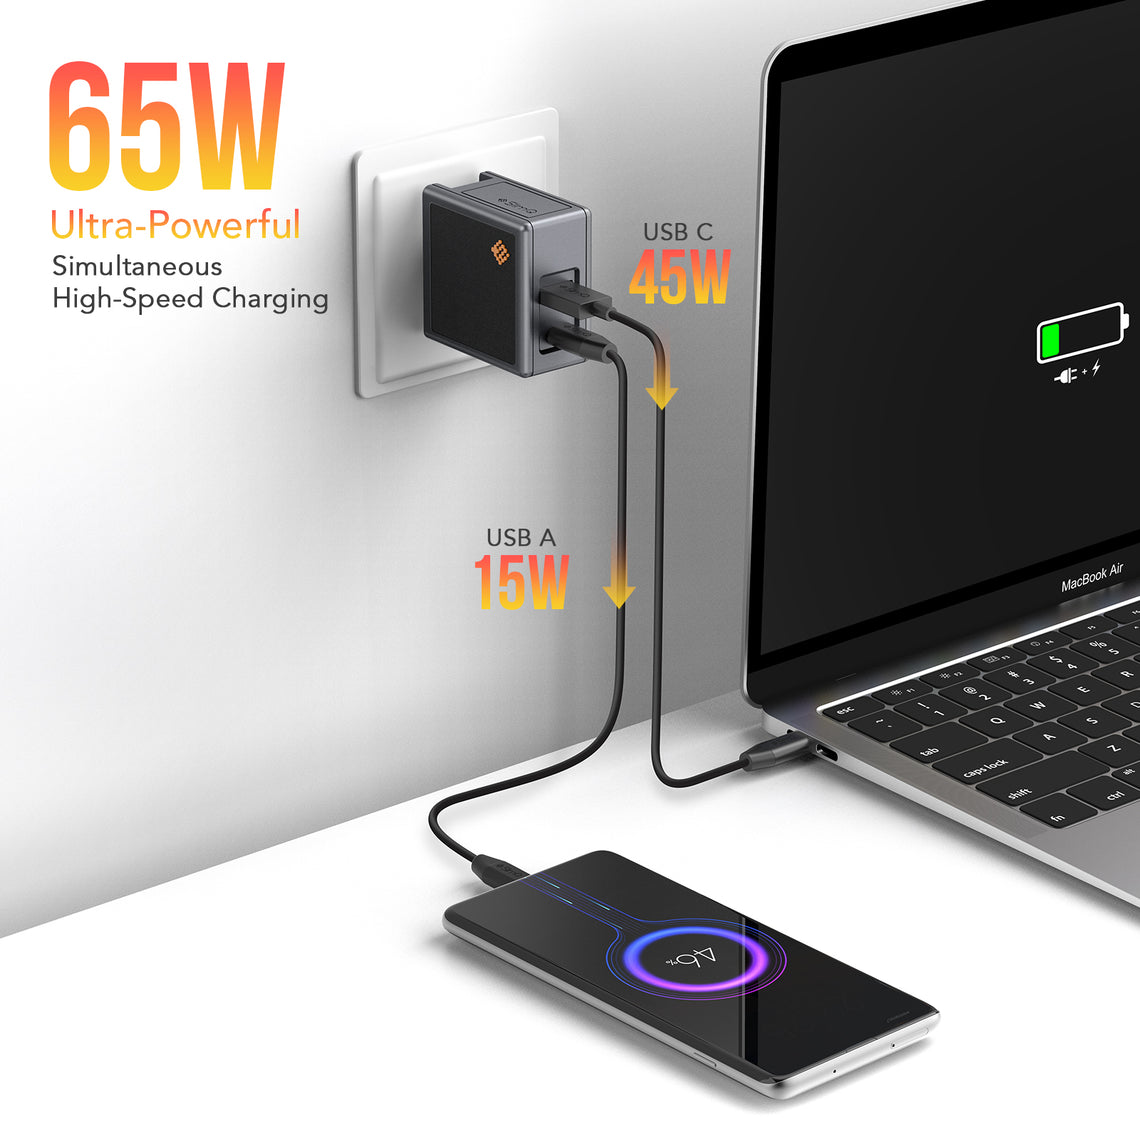 65W USB C GaN Charger